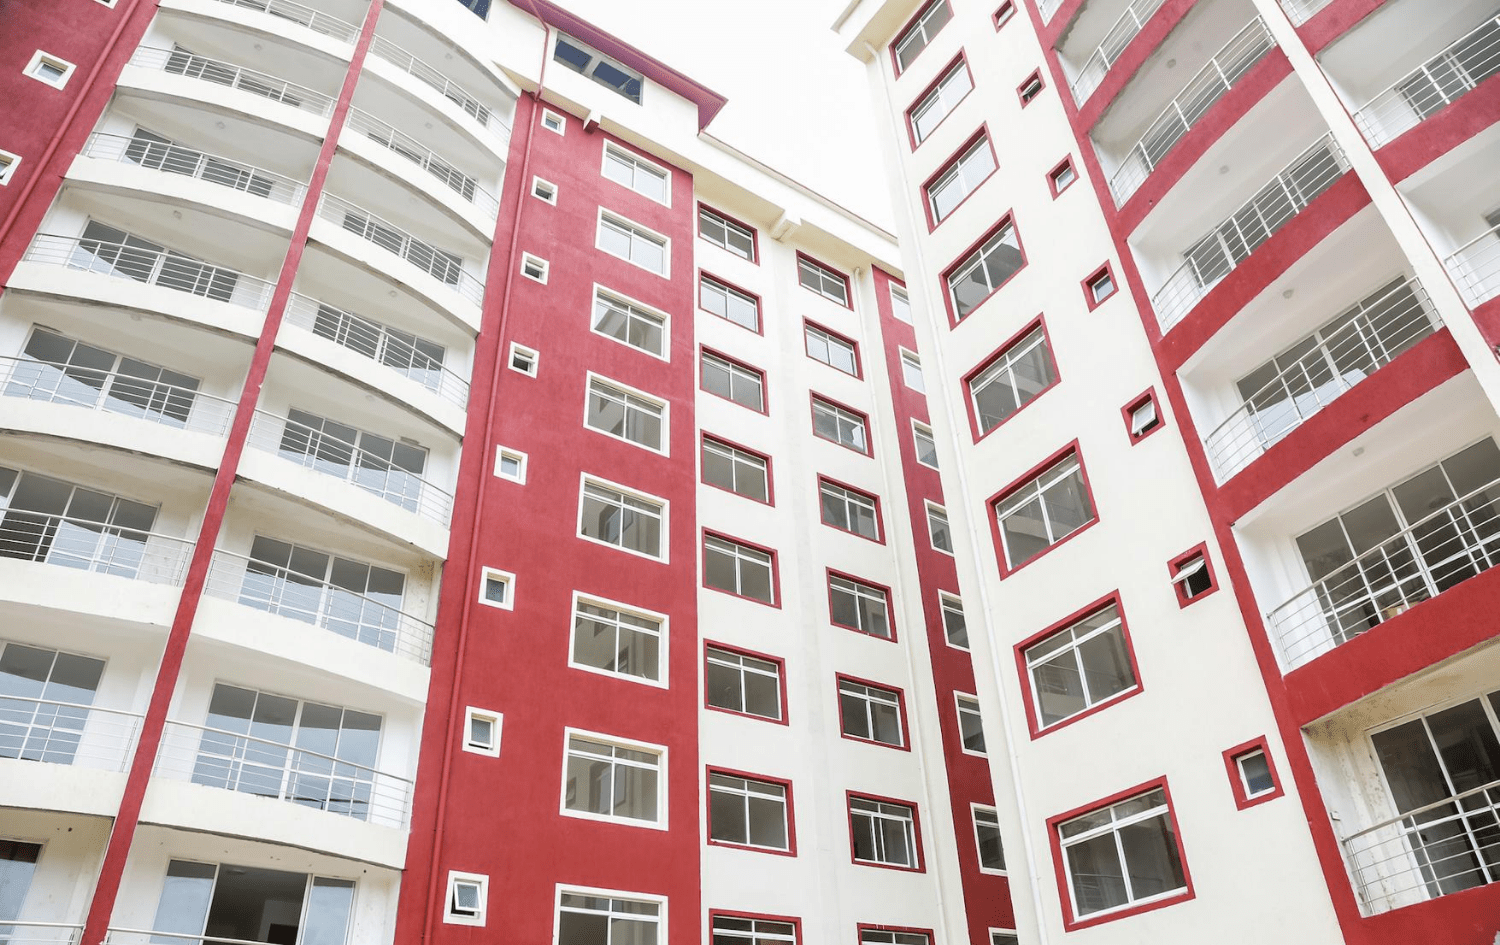 The Greenzone apartments